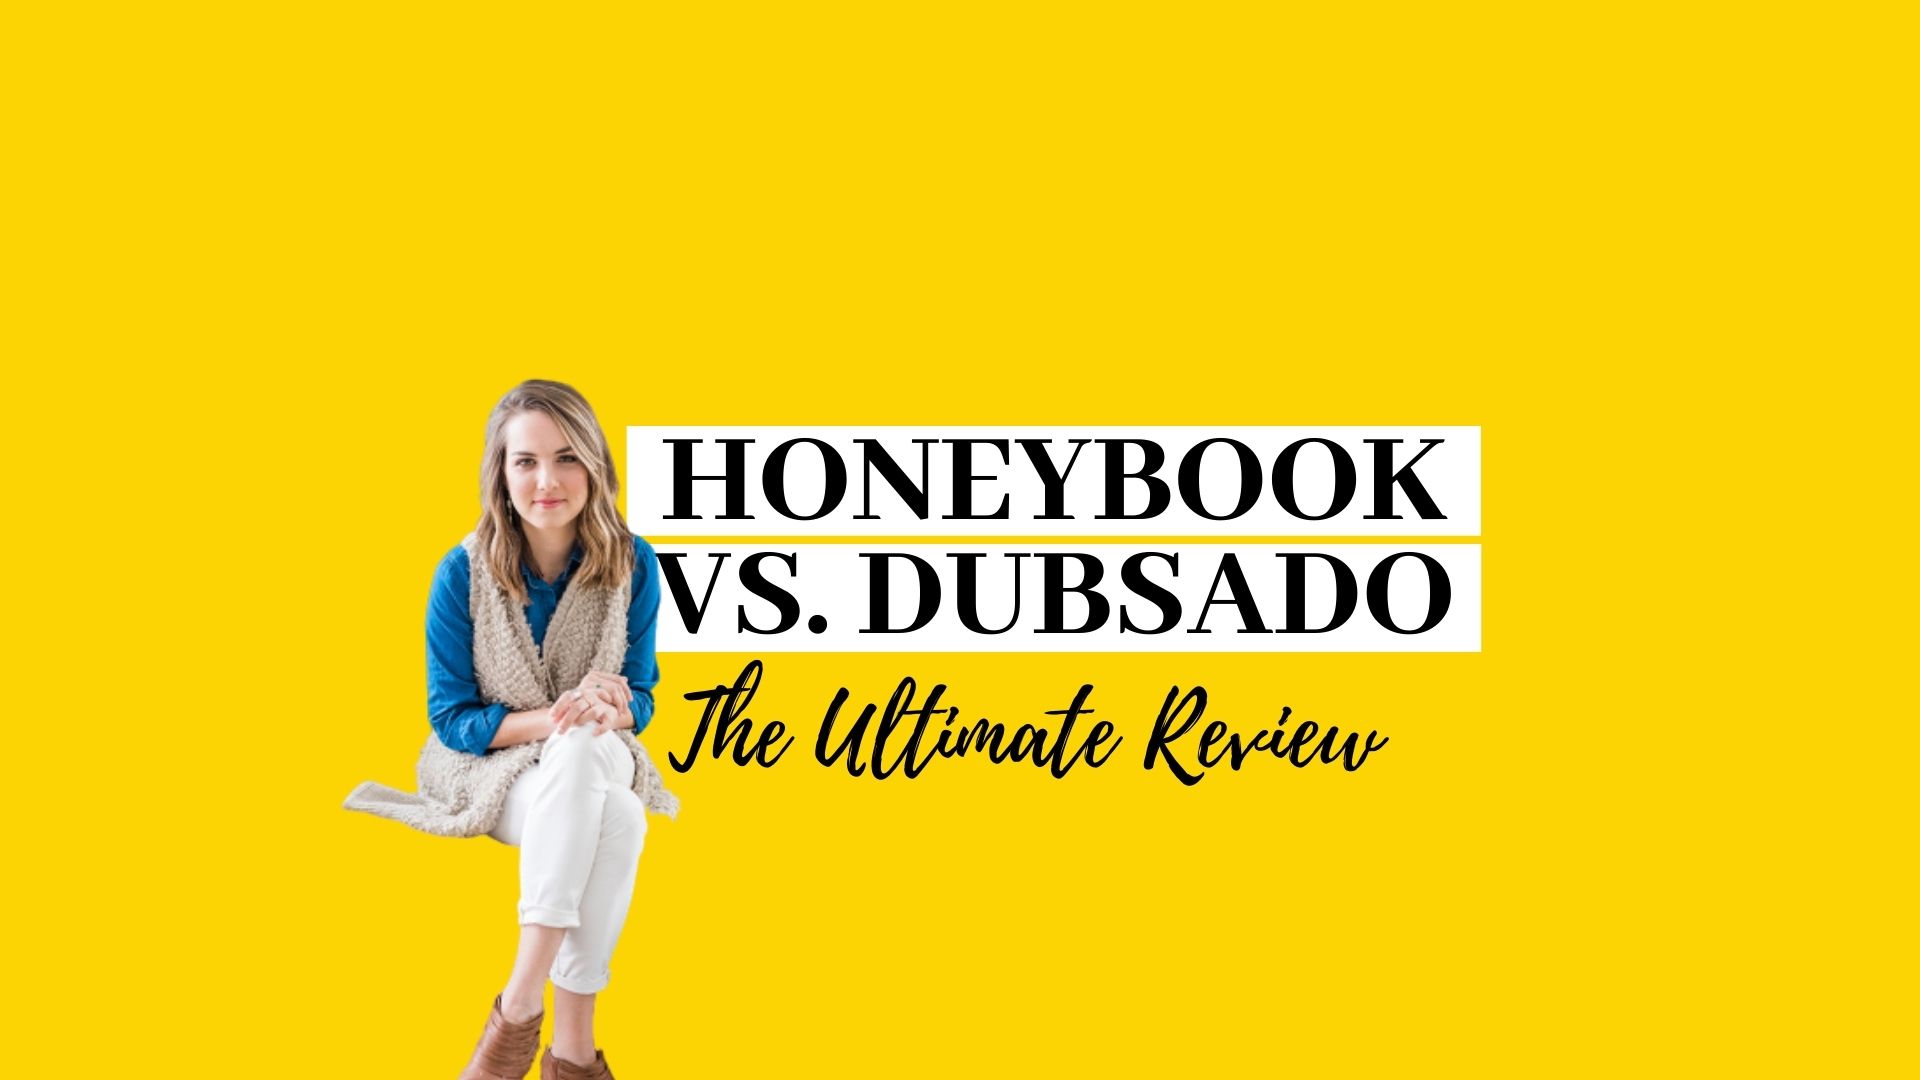 Honeybook vs. Dubsado